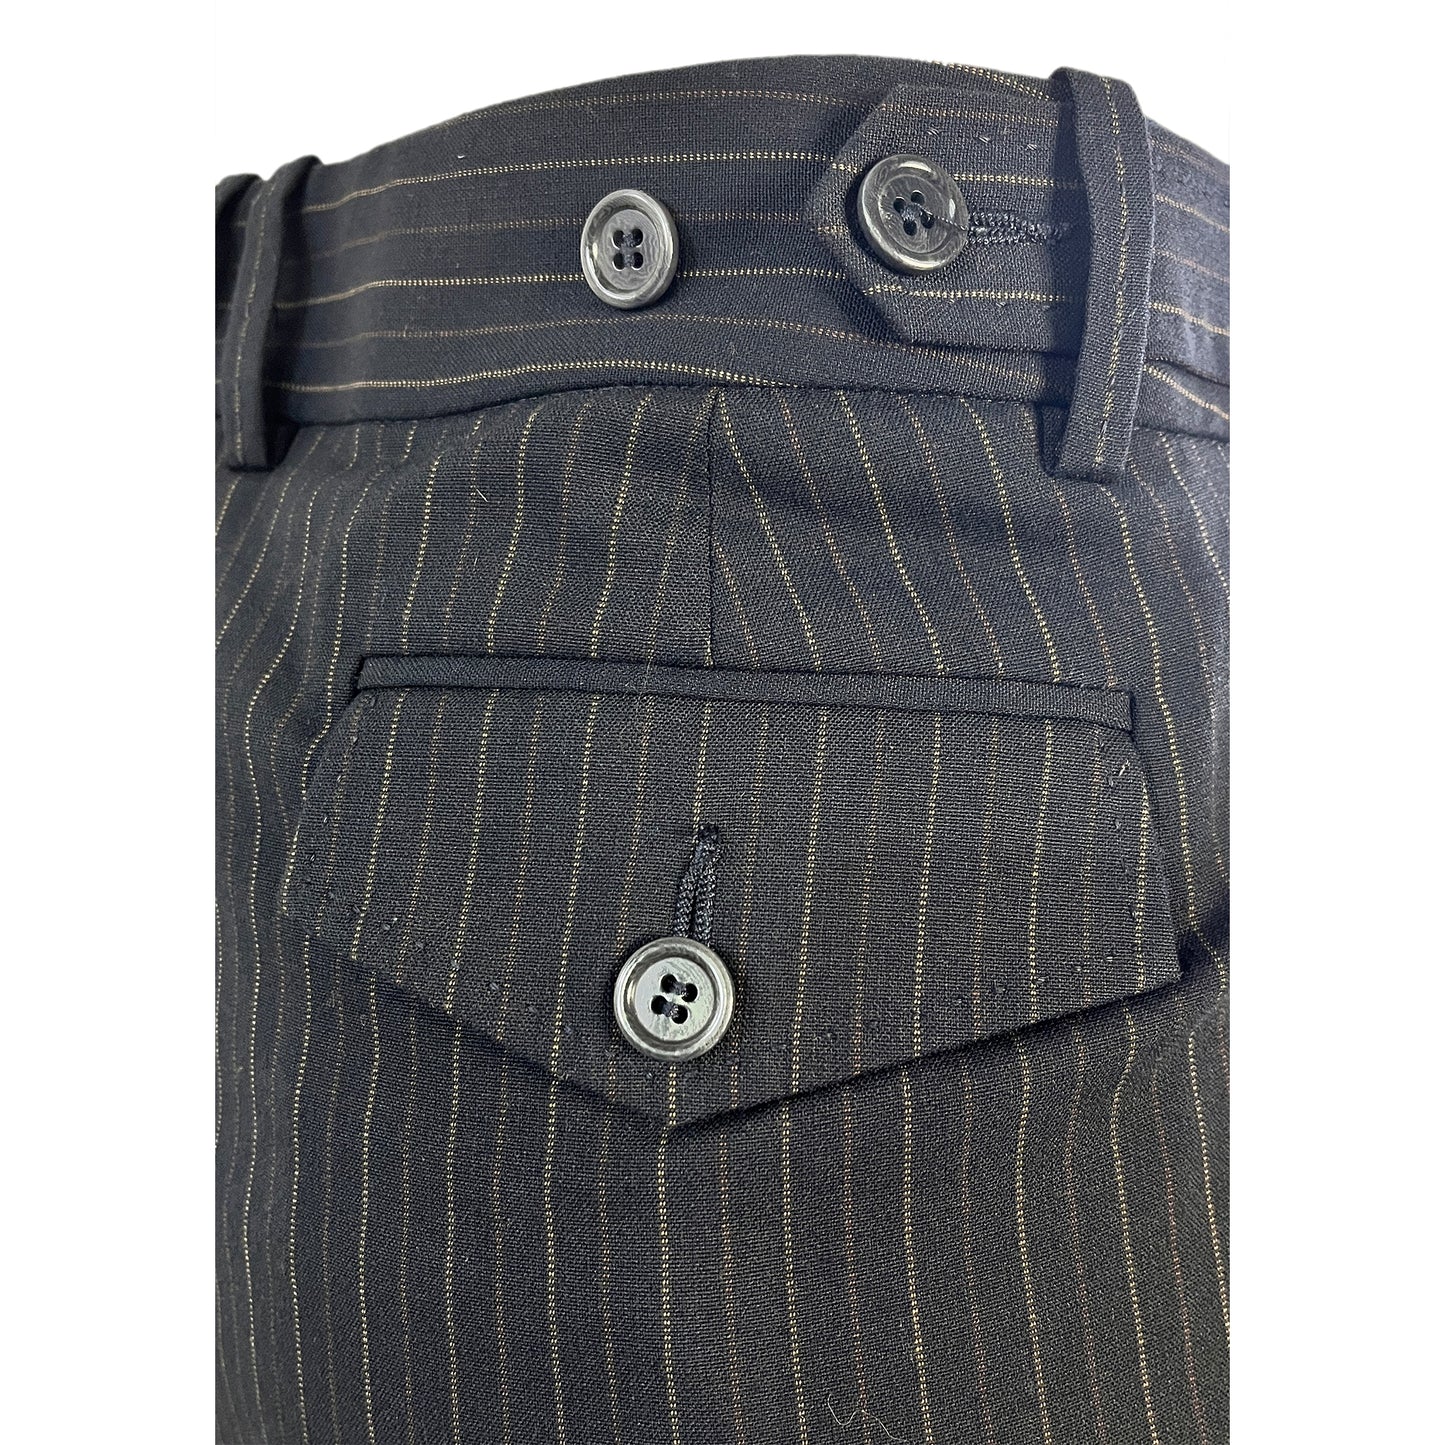 BCBG Skirt Mini Pin Stripe Navy, Brown, Tan Size 10 SKU 000372-6